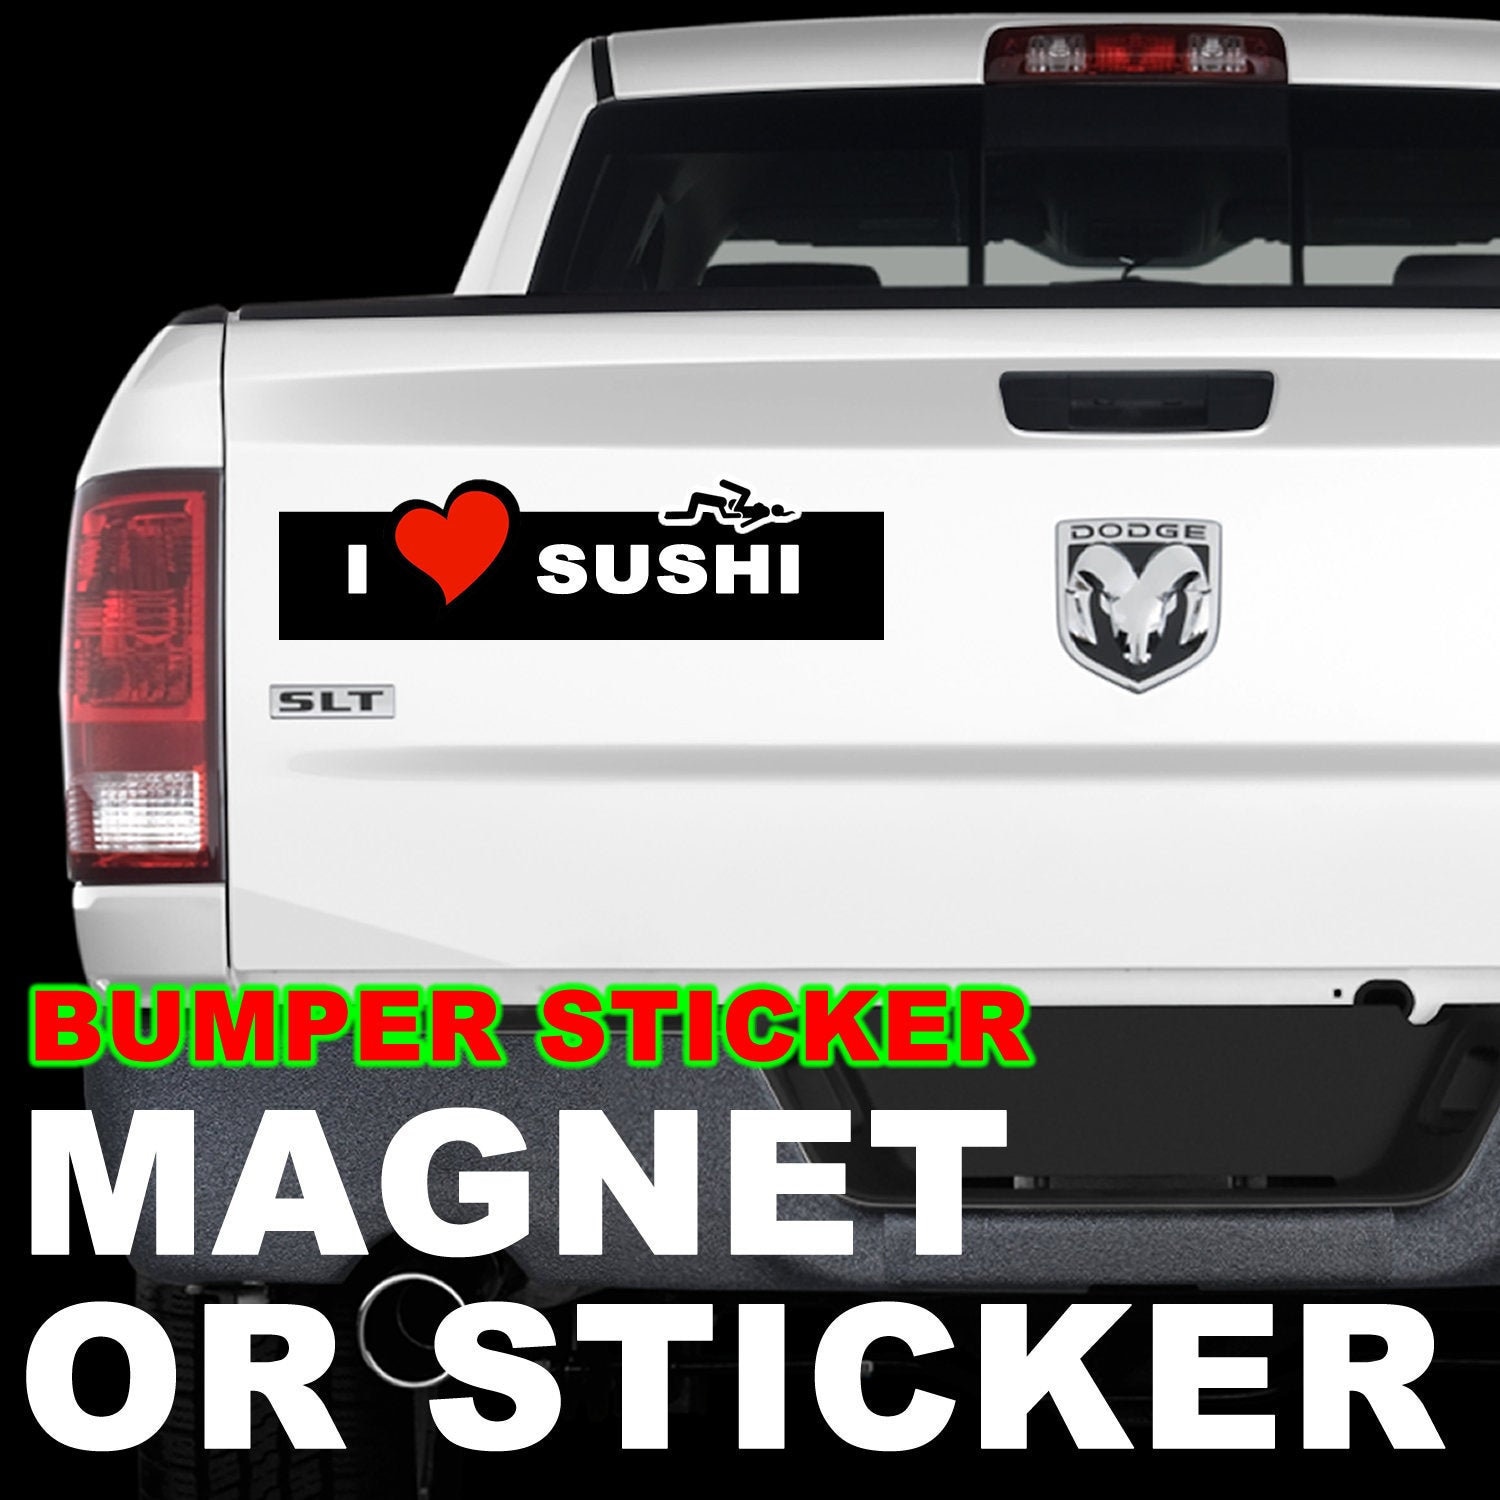 I Love Sushi outline Bumper Sticker 9x2.7 Bumper Sticker or Magnetic Bumper Sticker Available